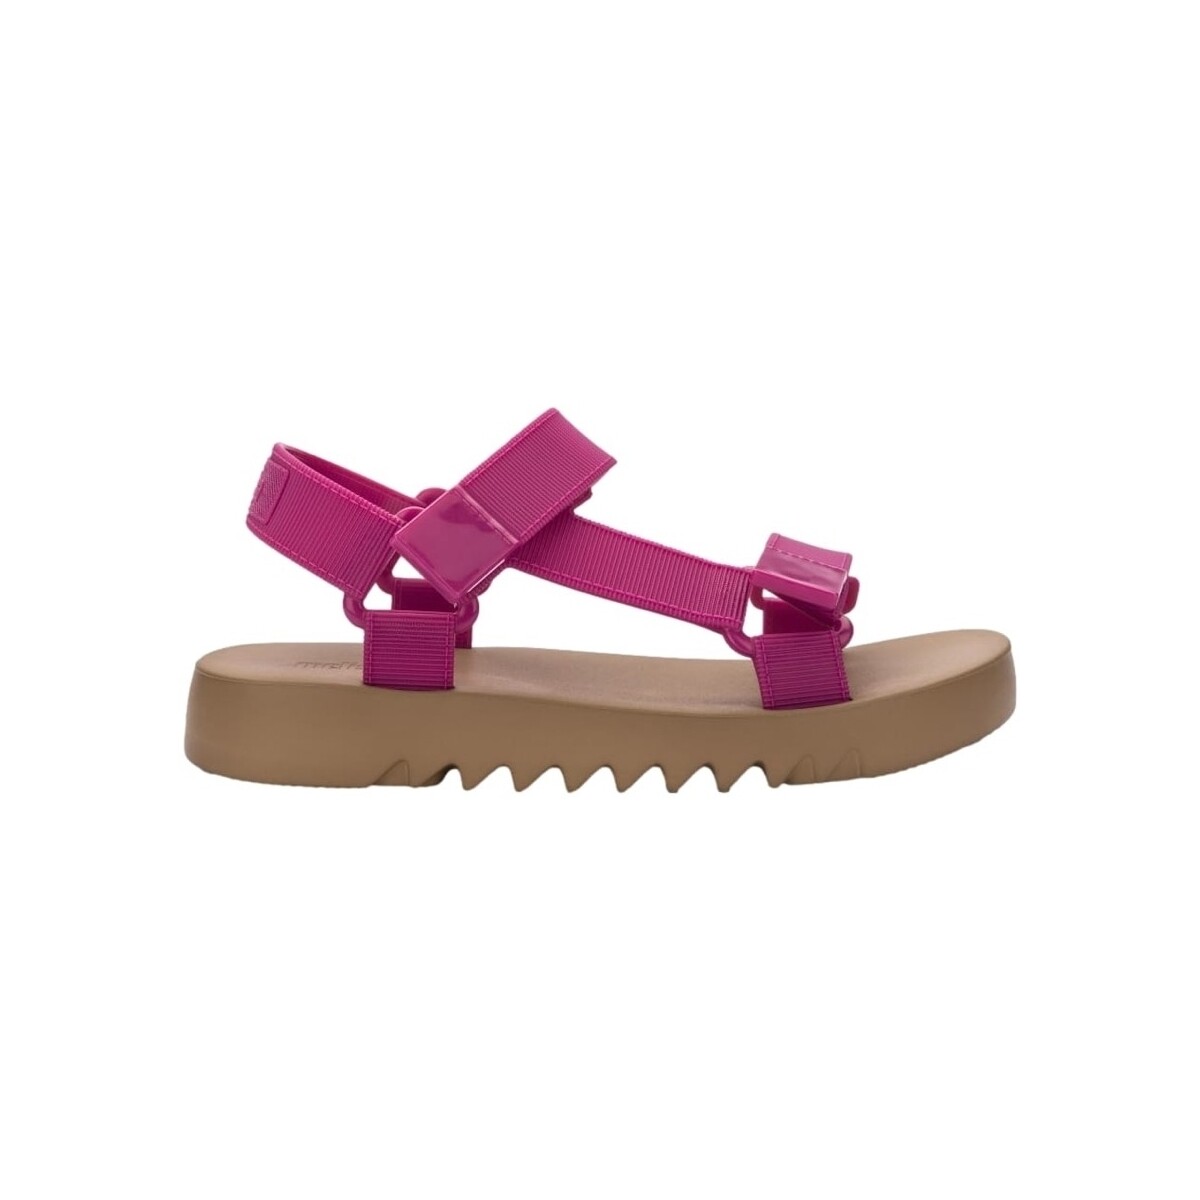 Pantofi Femei Sandale Melissa Flowing Papete Fem - Lilas/Beige roz